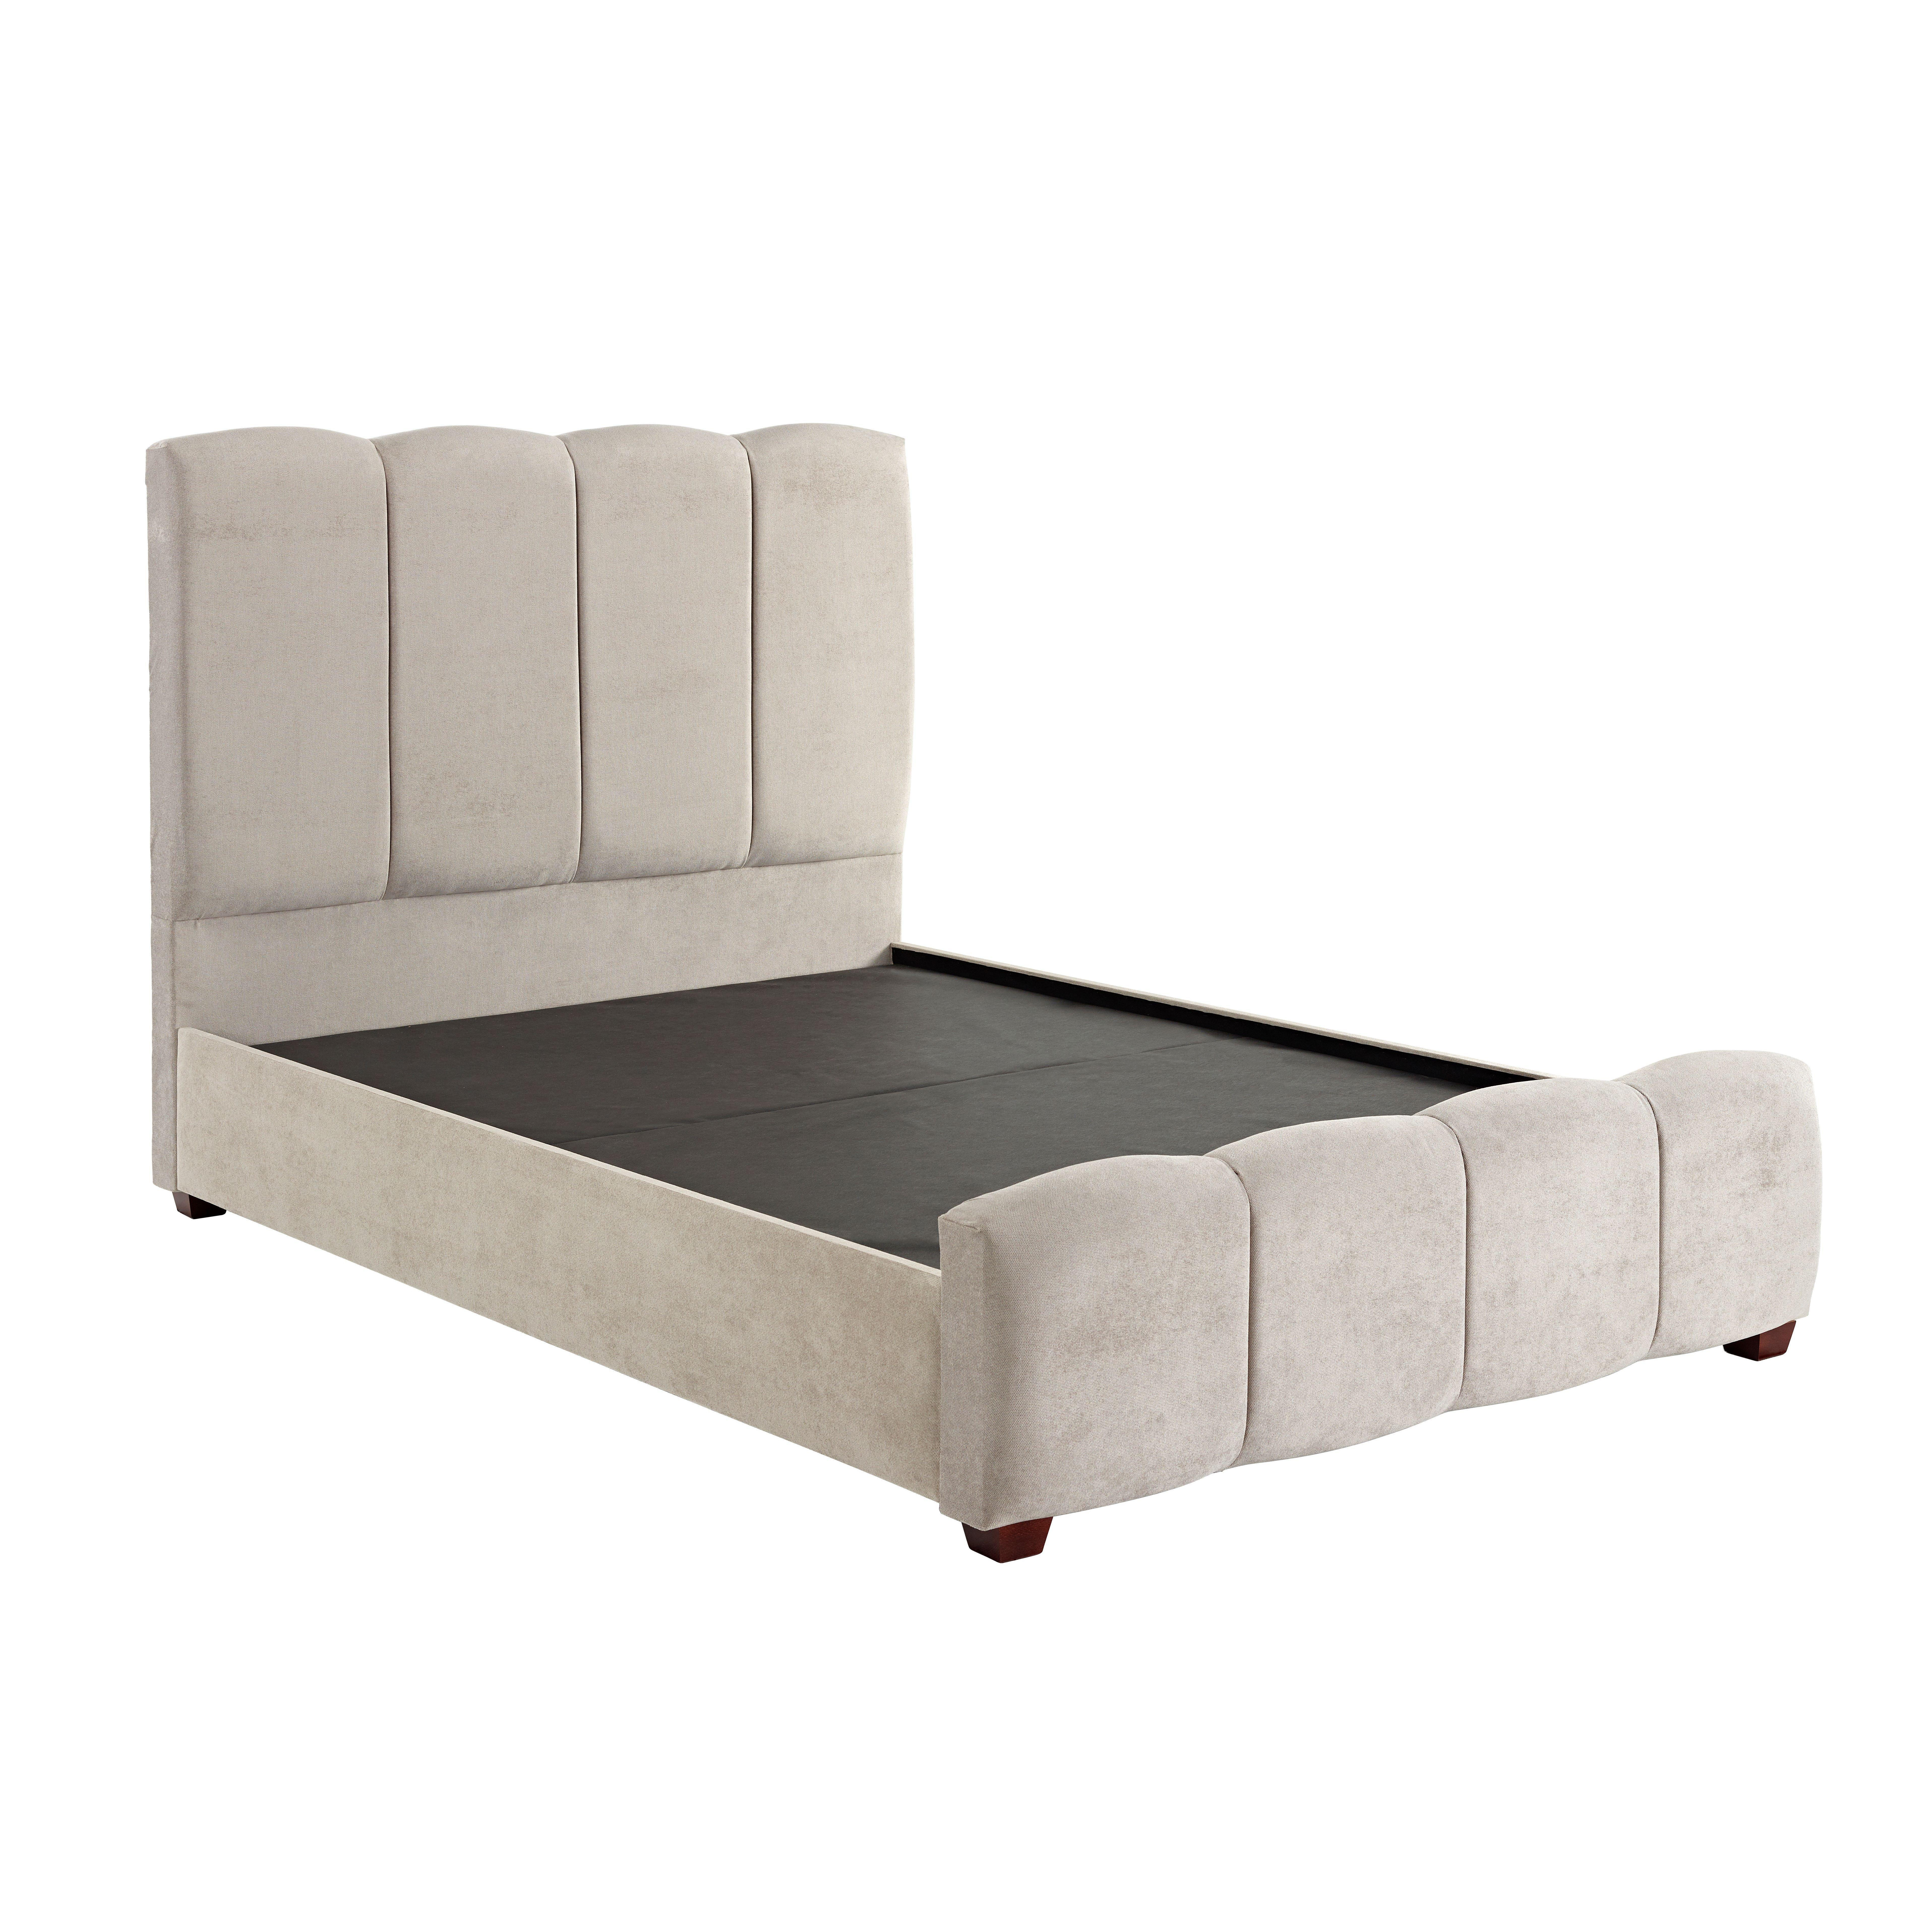 Claire Panel Luxury Crushed Velvet Upholstered Bed Frame Kensington Silver - image 1